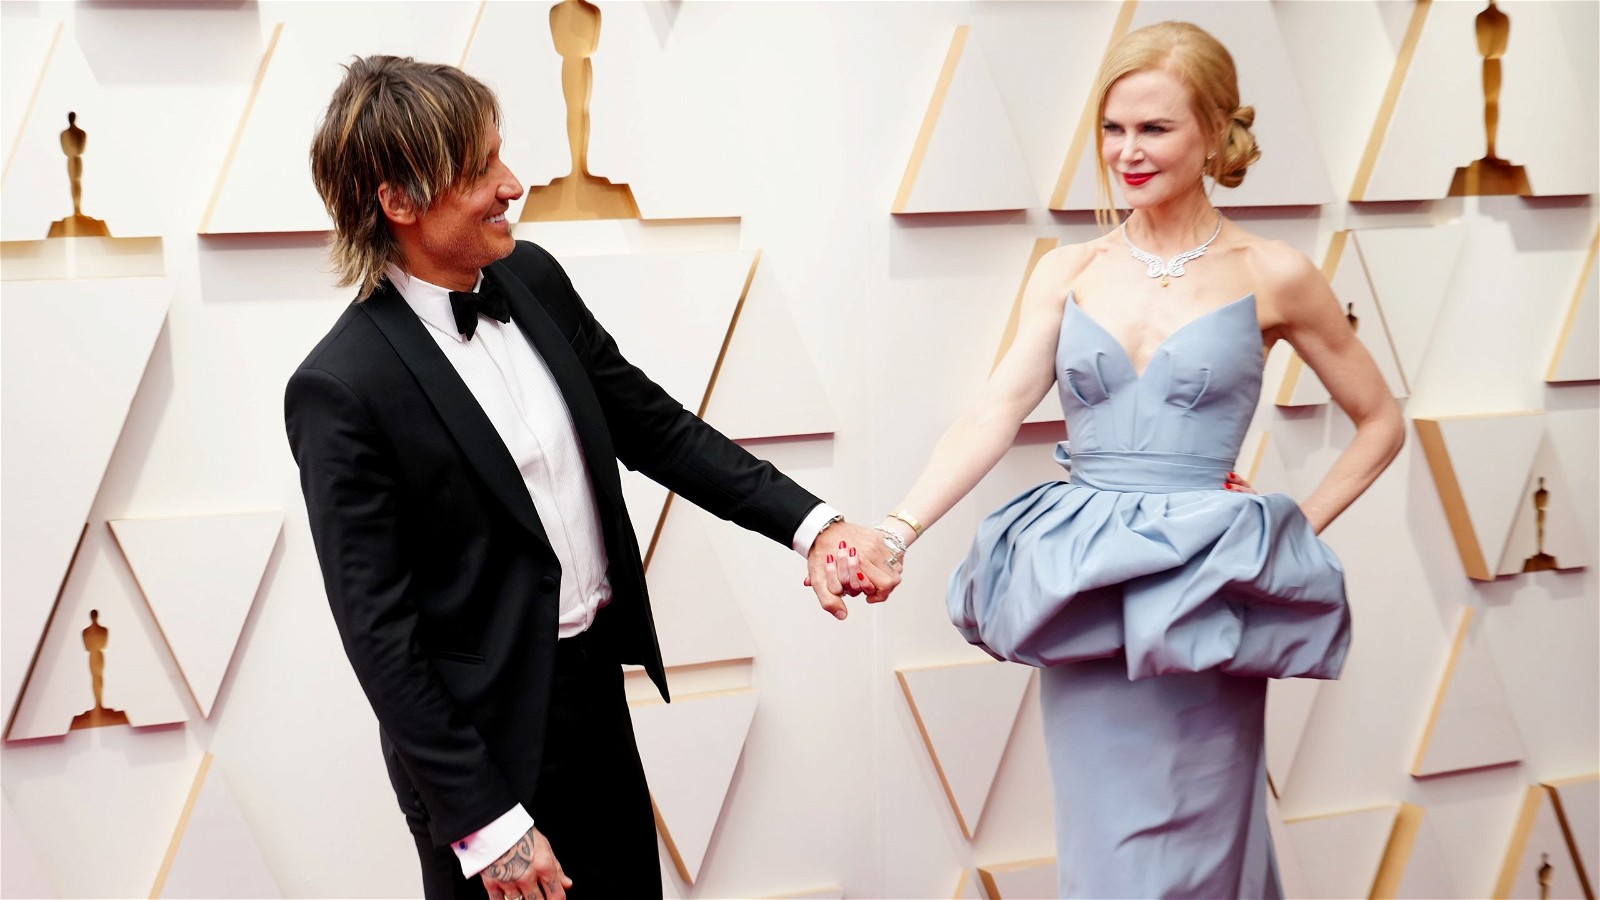 Nicole Kidman at Oscars 2022